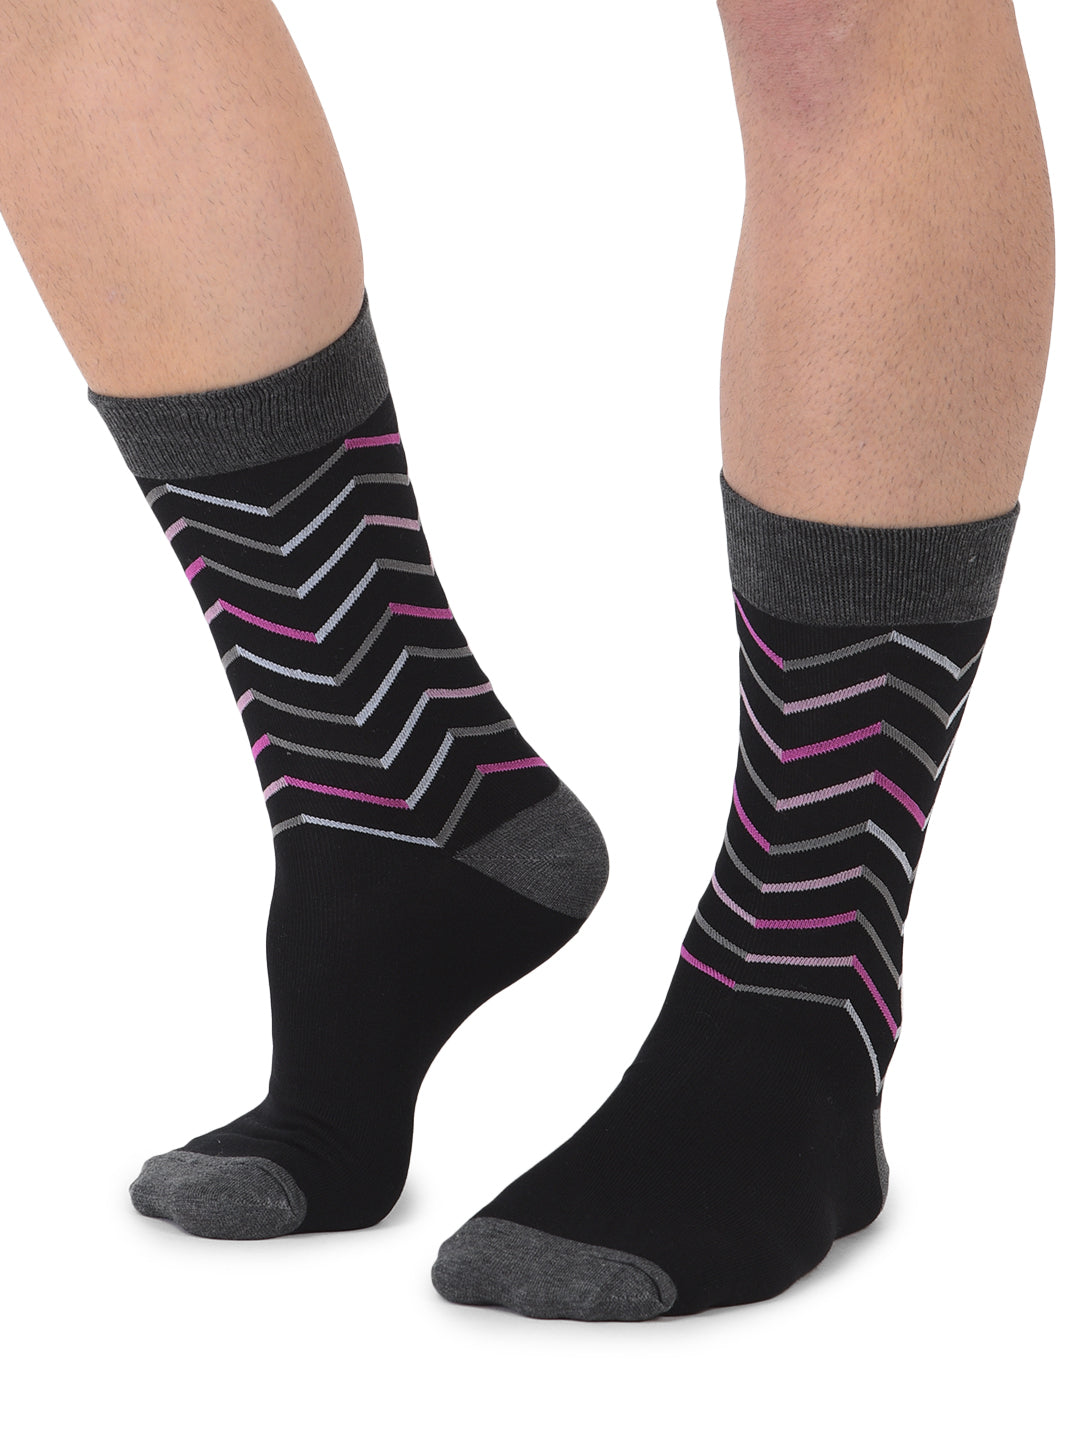 Men's Formal Crew Length Socks, Black Colors and Zigzag Design, Free Size,Pack of 1 ( Black )